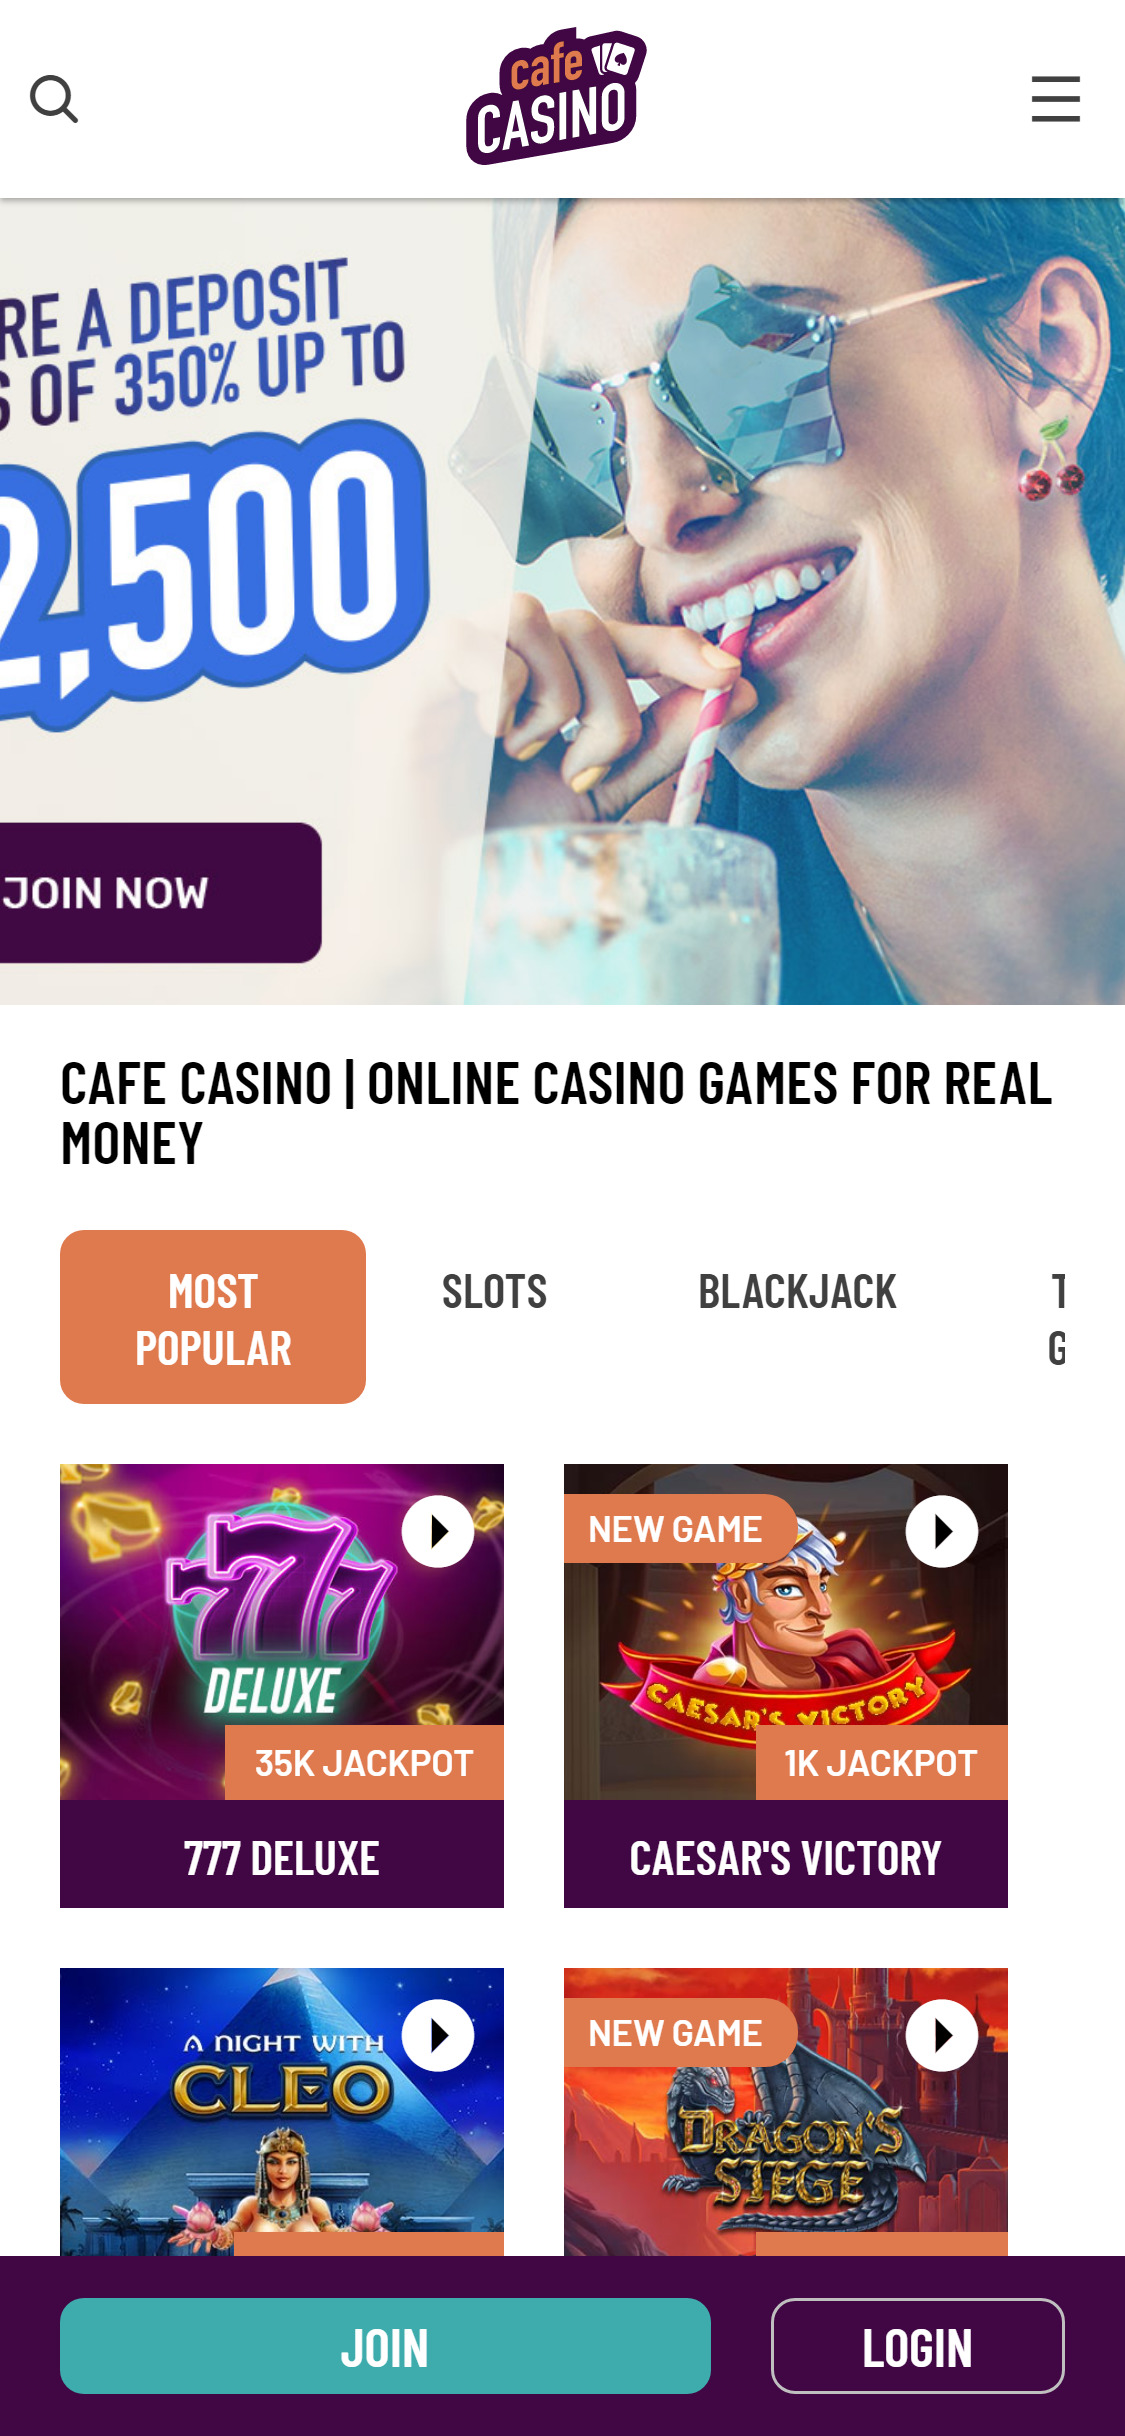 Cafe Casino Mobile Review